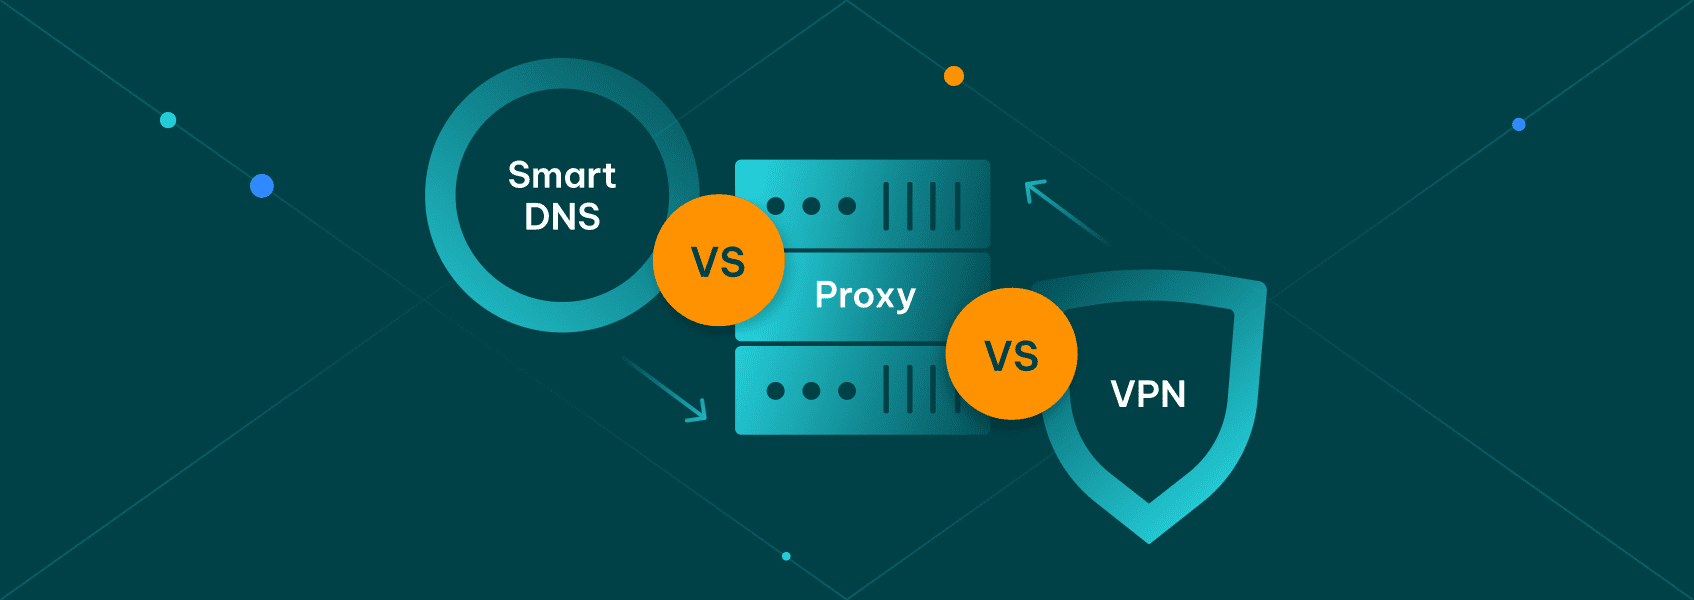 SmartDNS Vs. Proxy Vs. VPN – Which Should You Use?